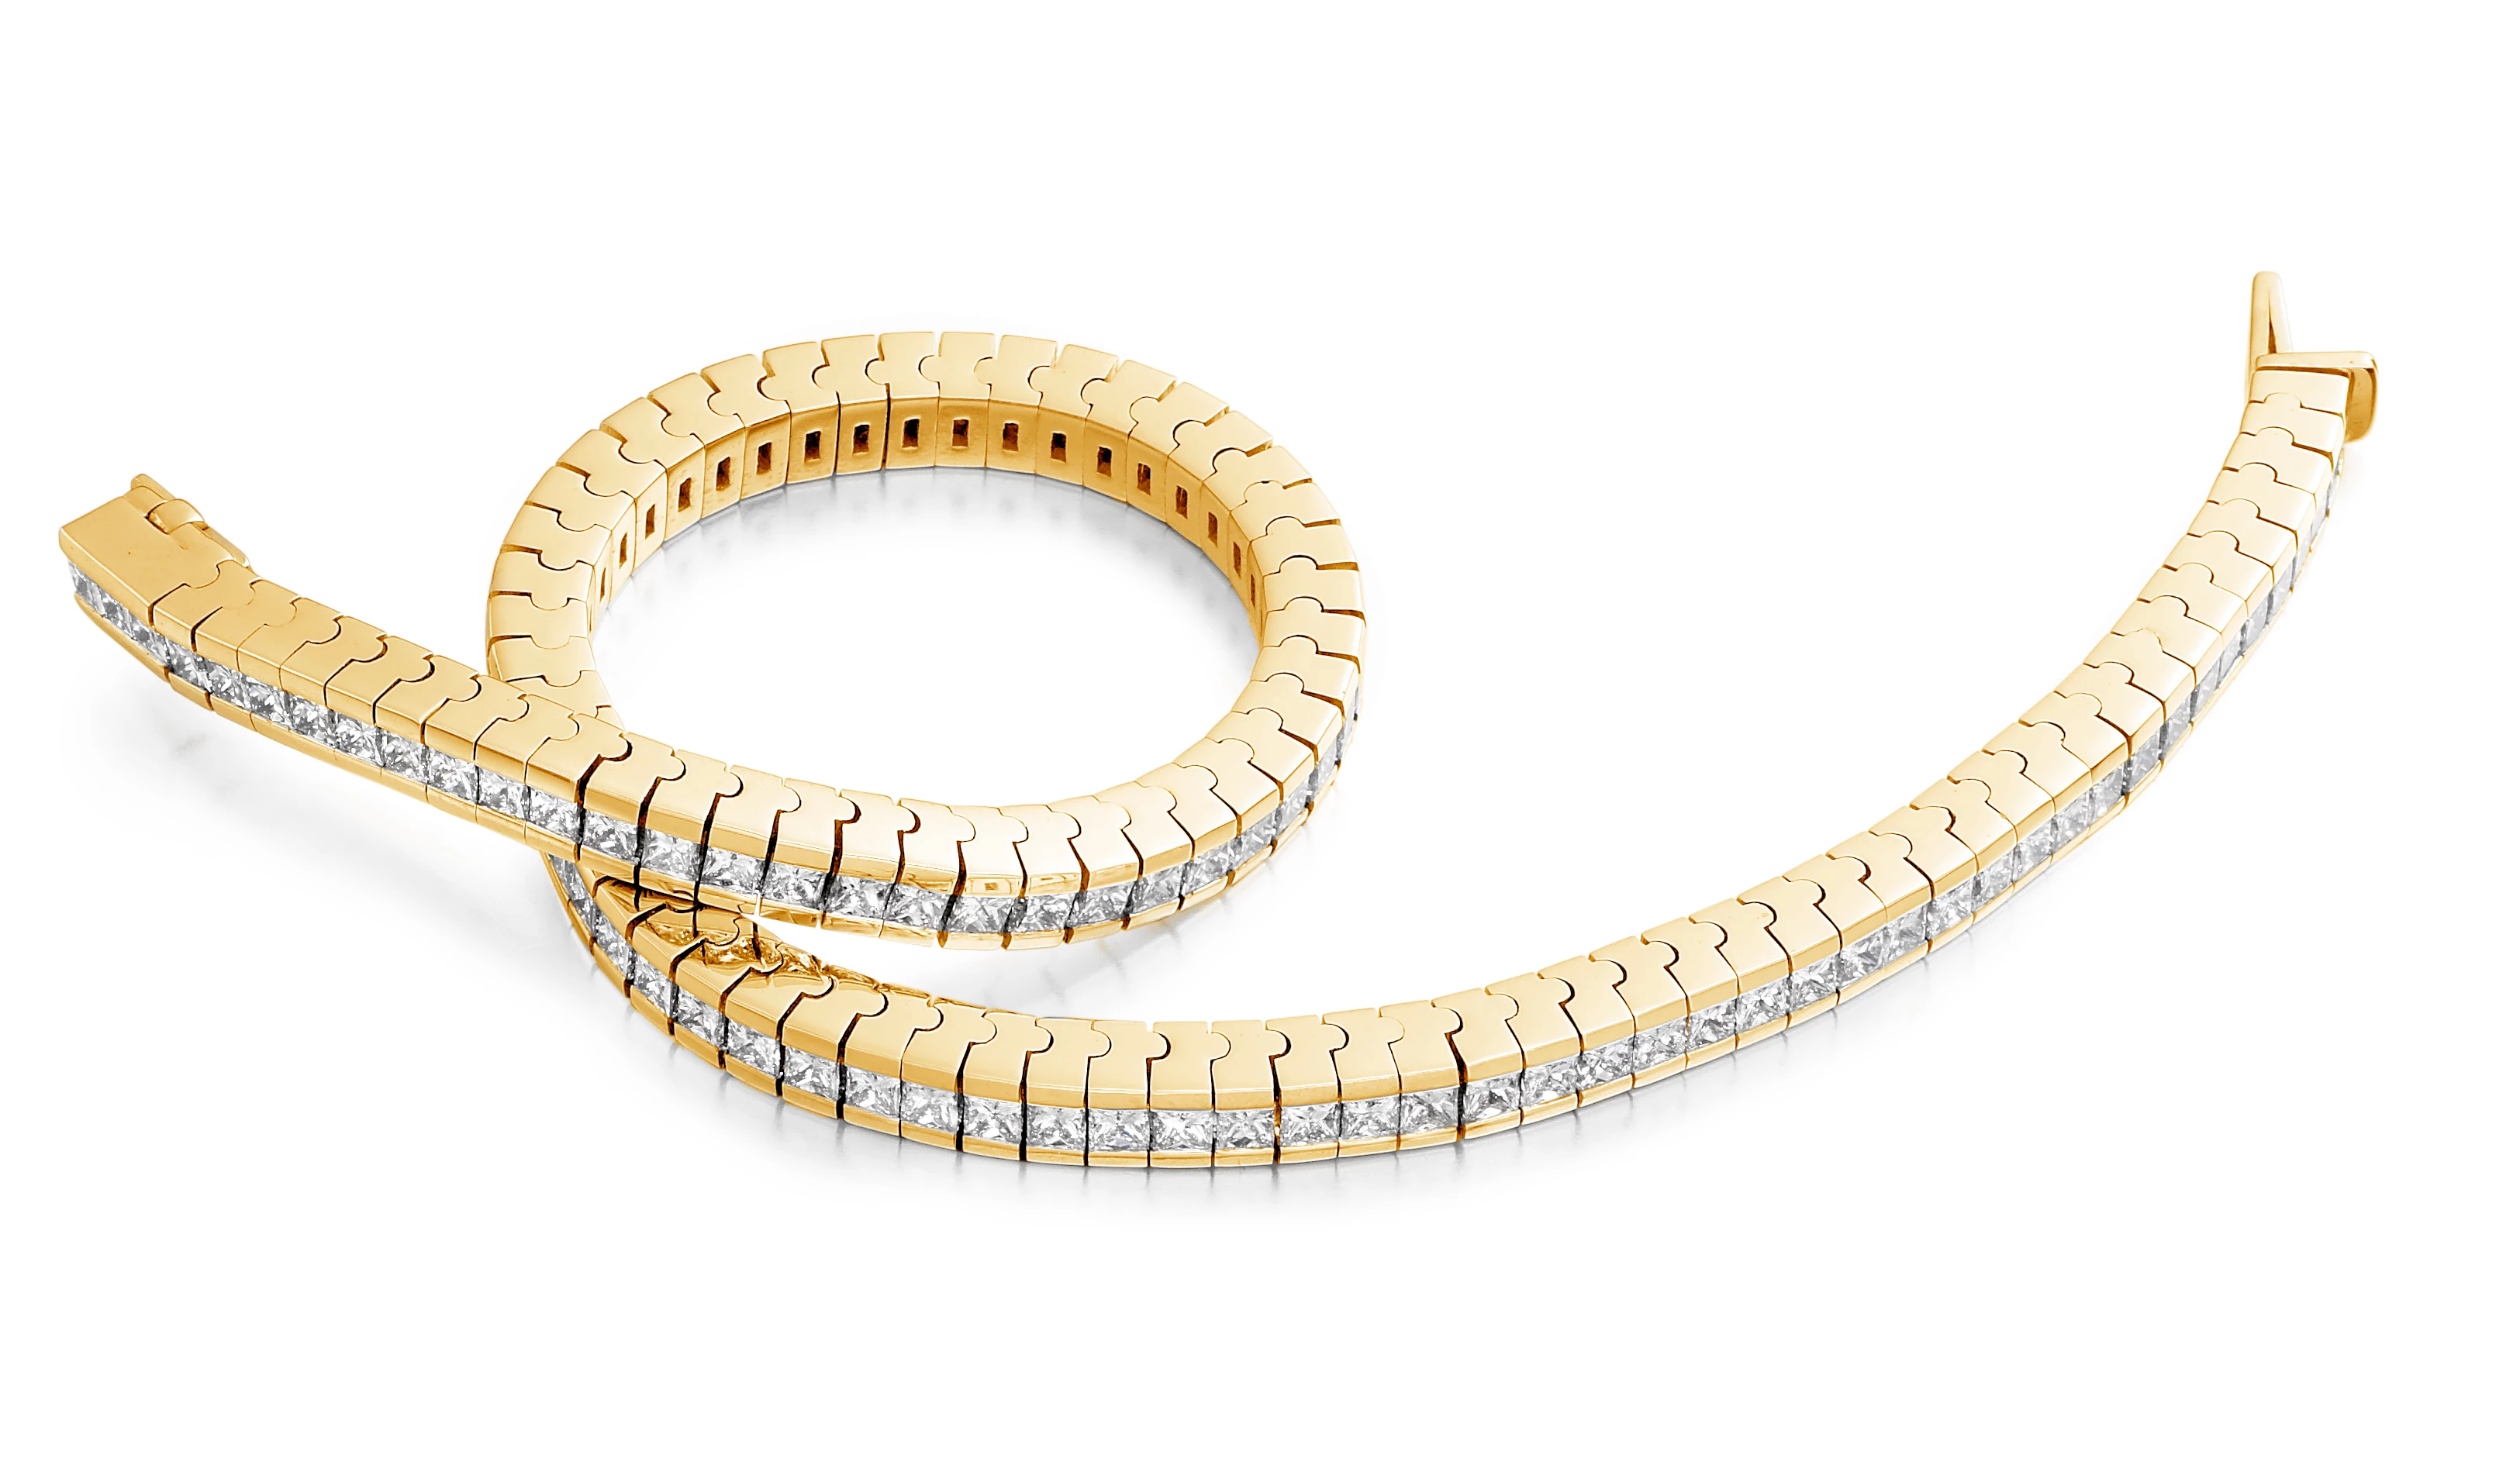 4.5ct Alvera Diamond Bracelet in 18K Yellow Gold